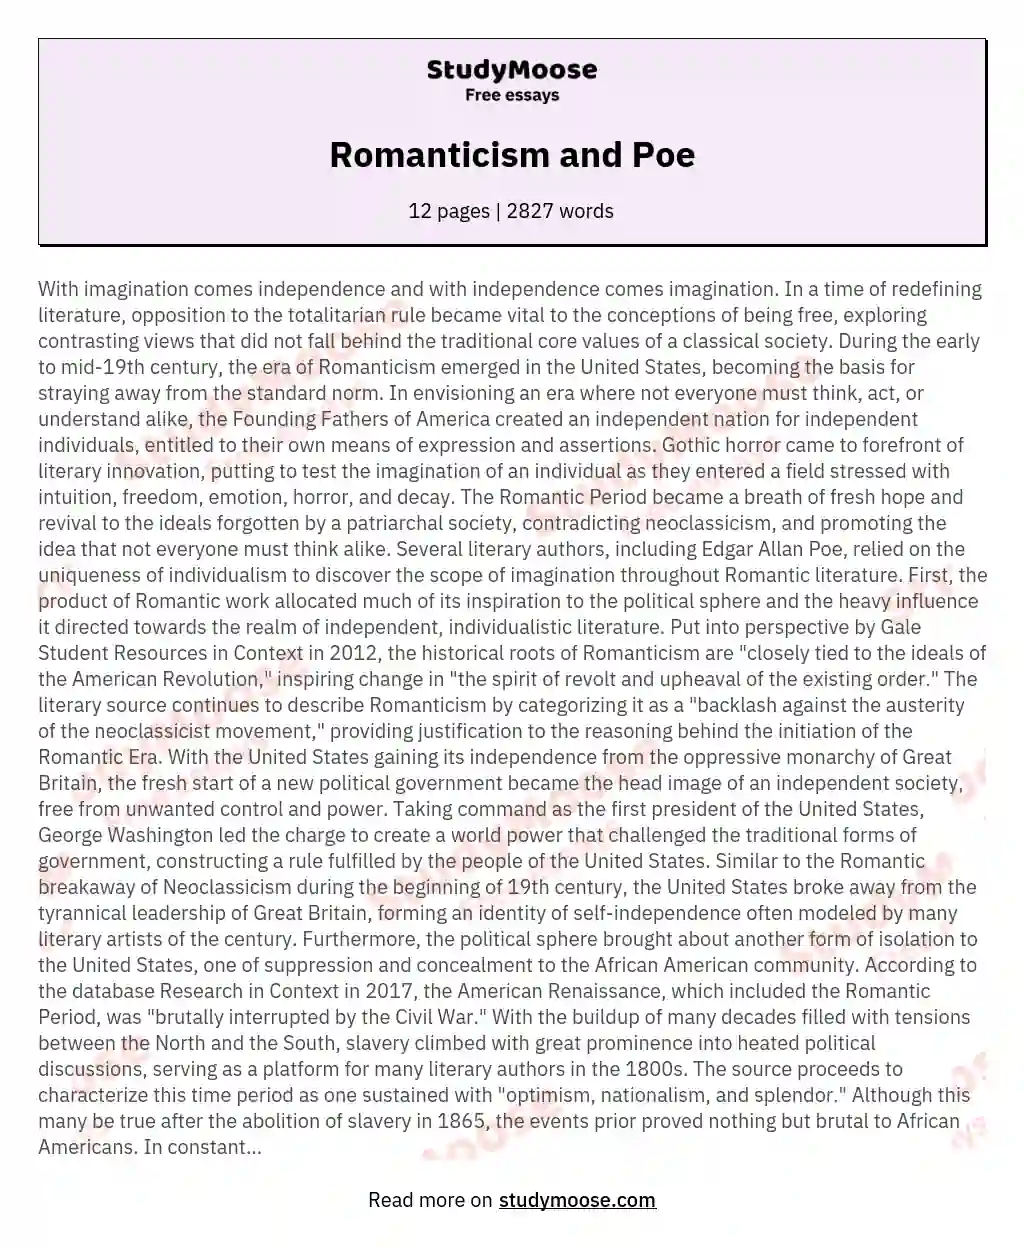 Romanticism and Poe essay